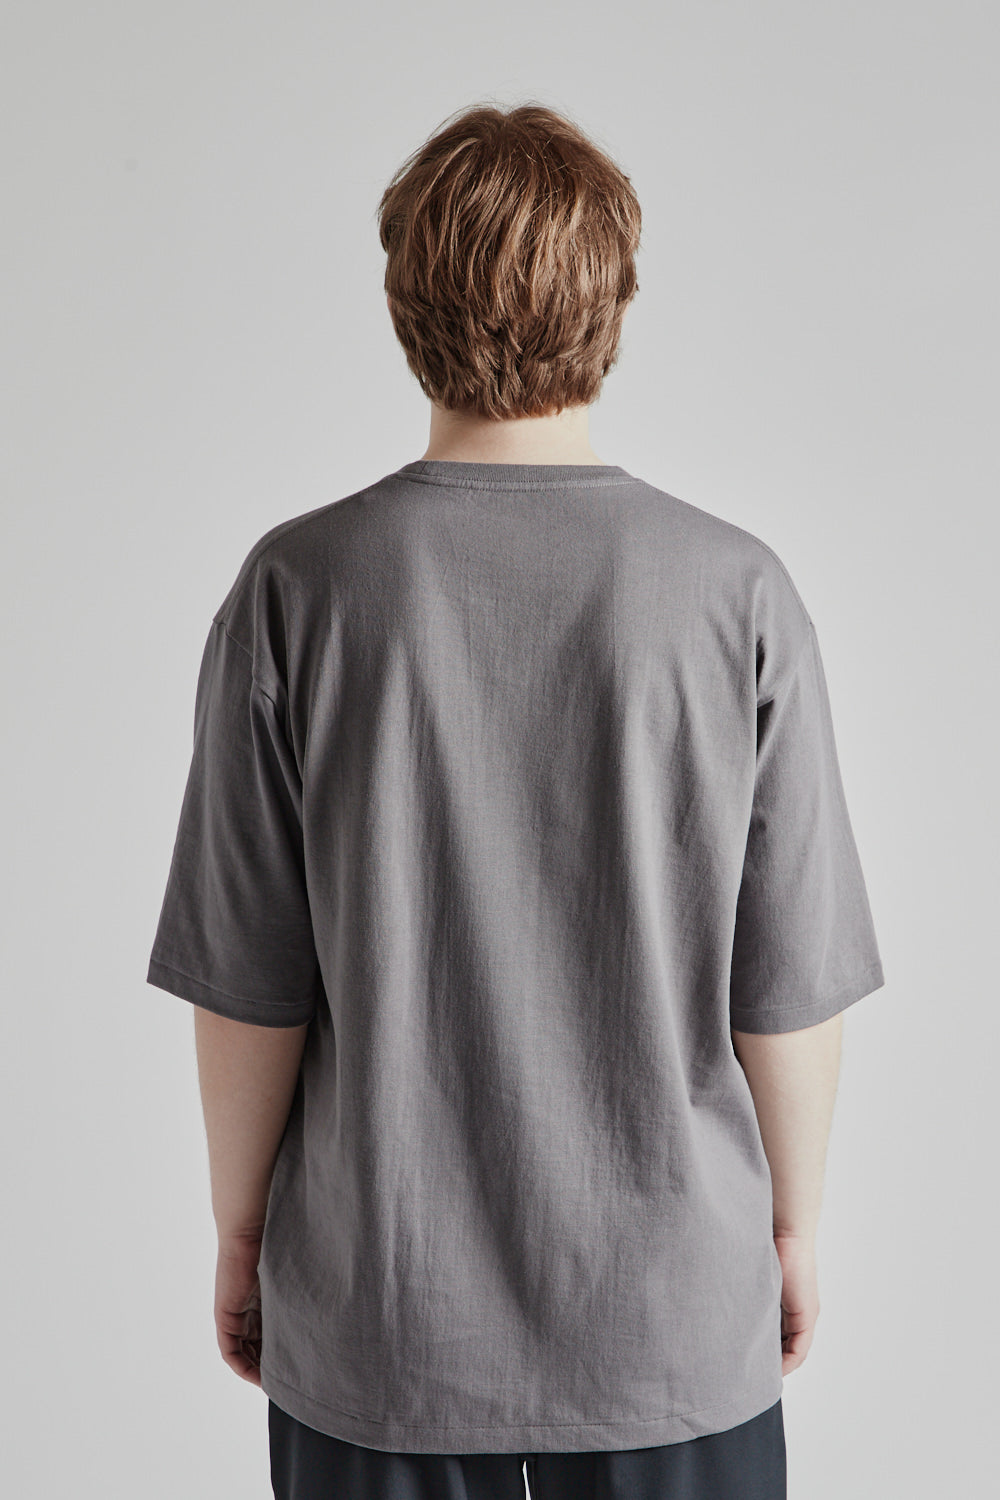 Meriyasu T-Shirts - Gray